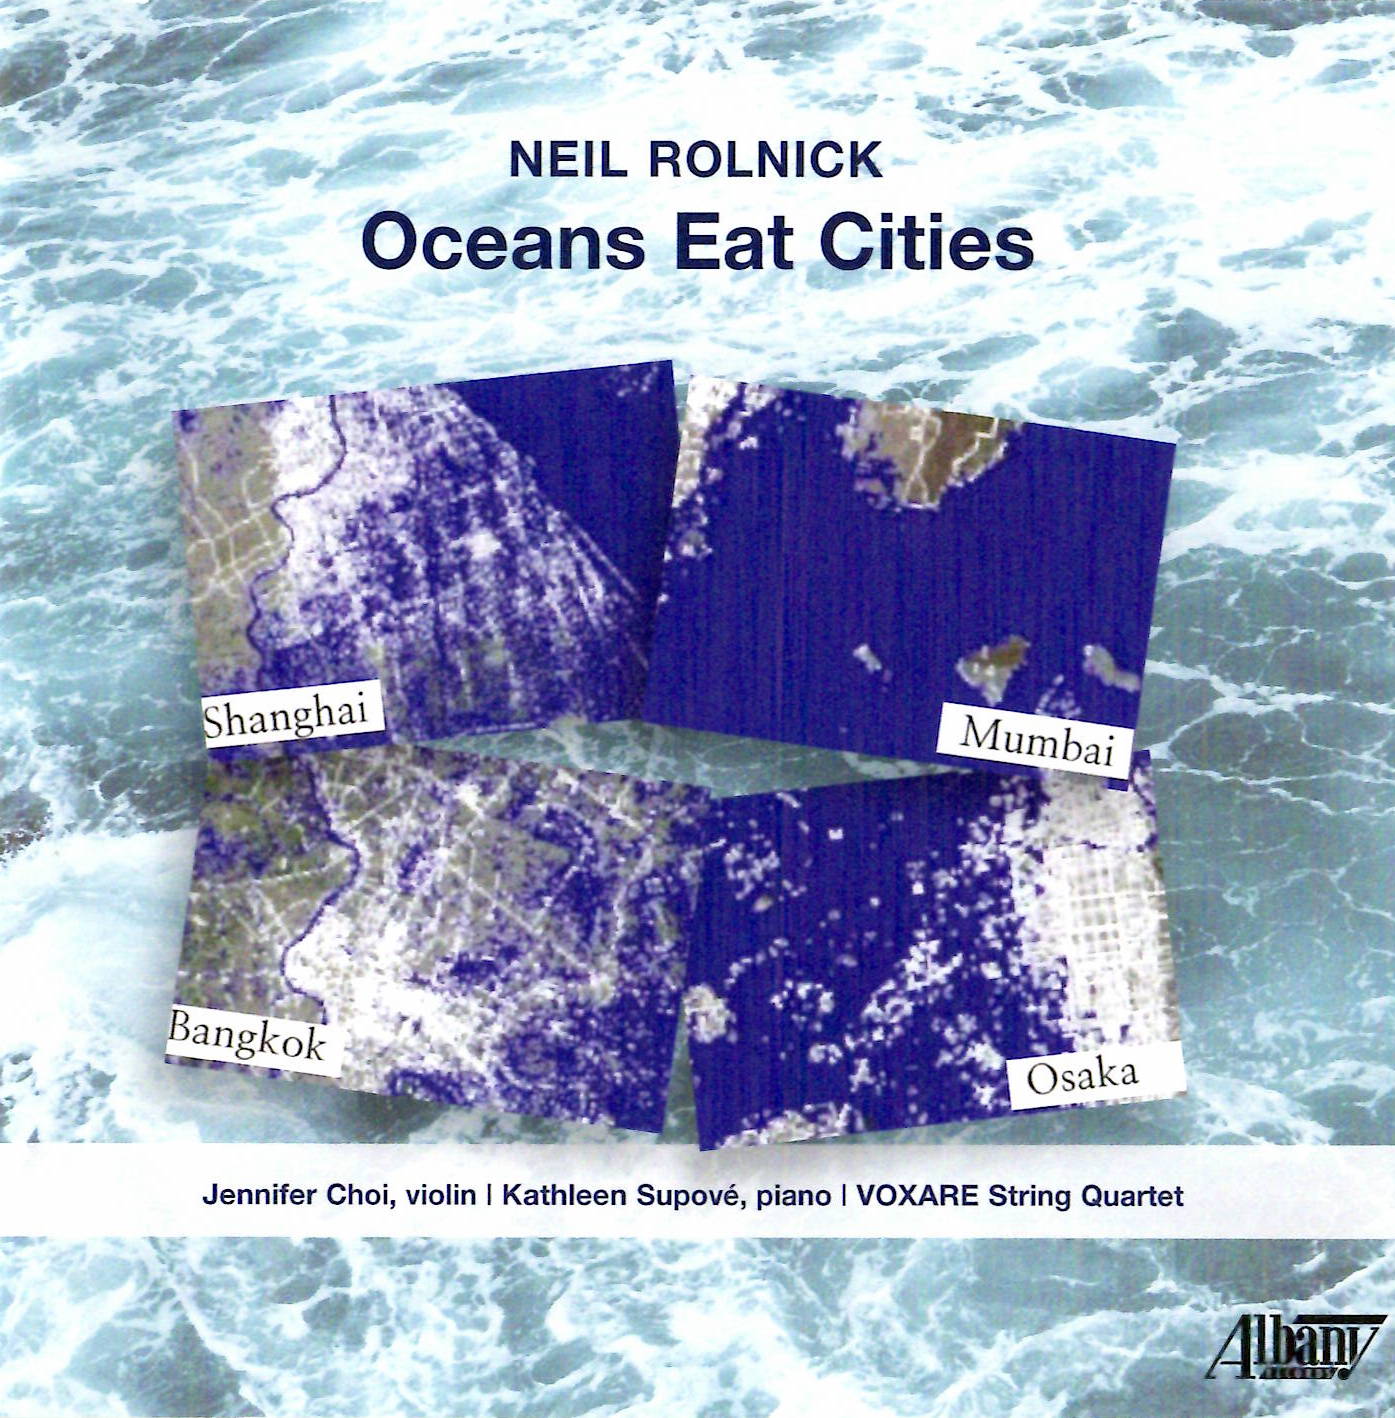 Neil Rolnick Oceans Eat Cities